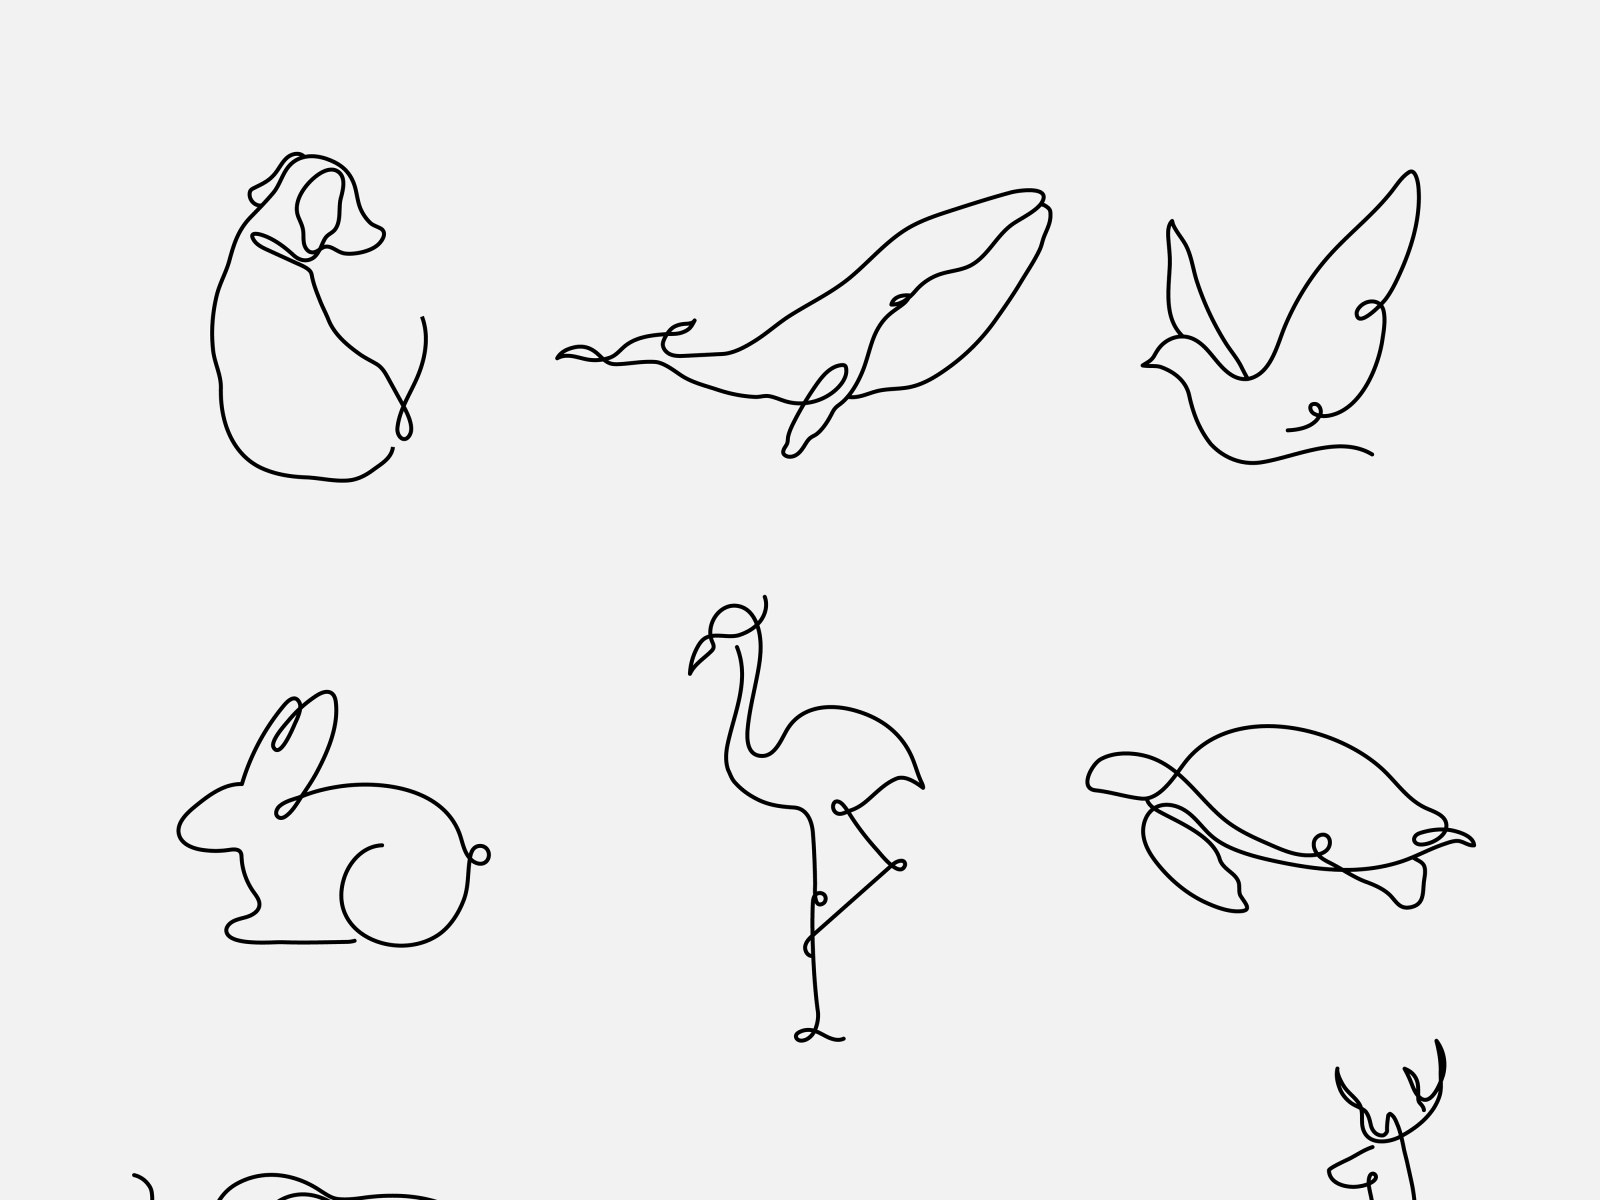 Minimal Animal Line Art Pack | Logos Elements by rawpixel on Dribbble